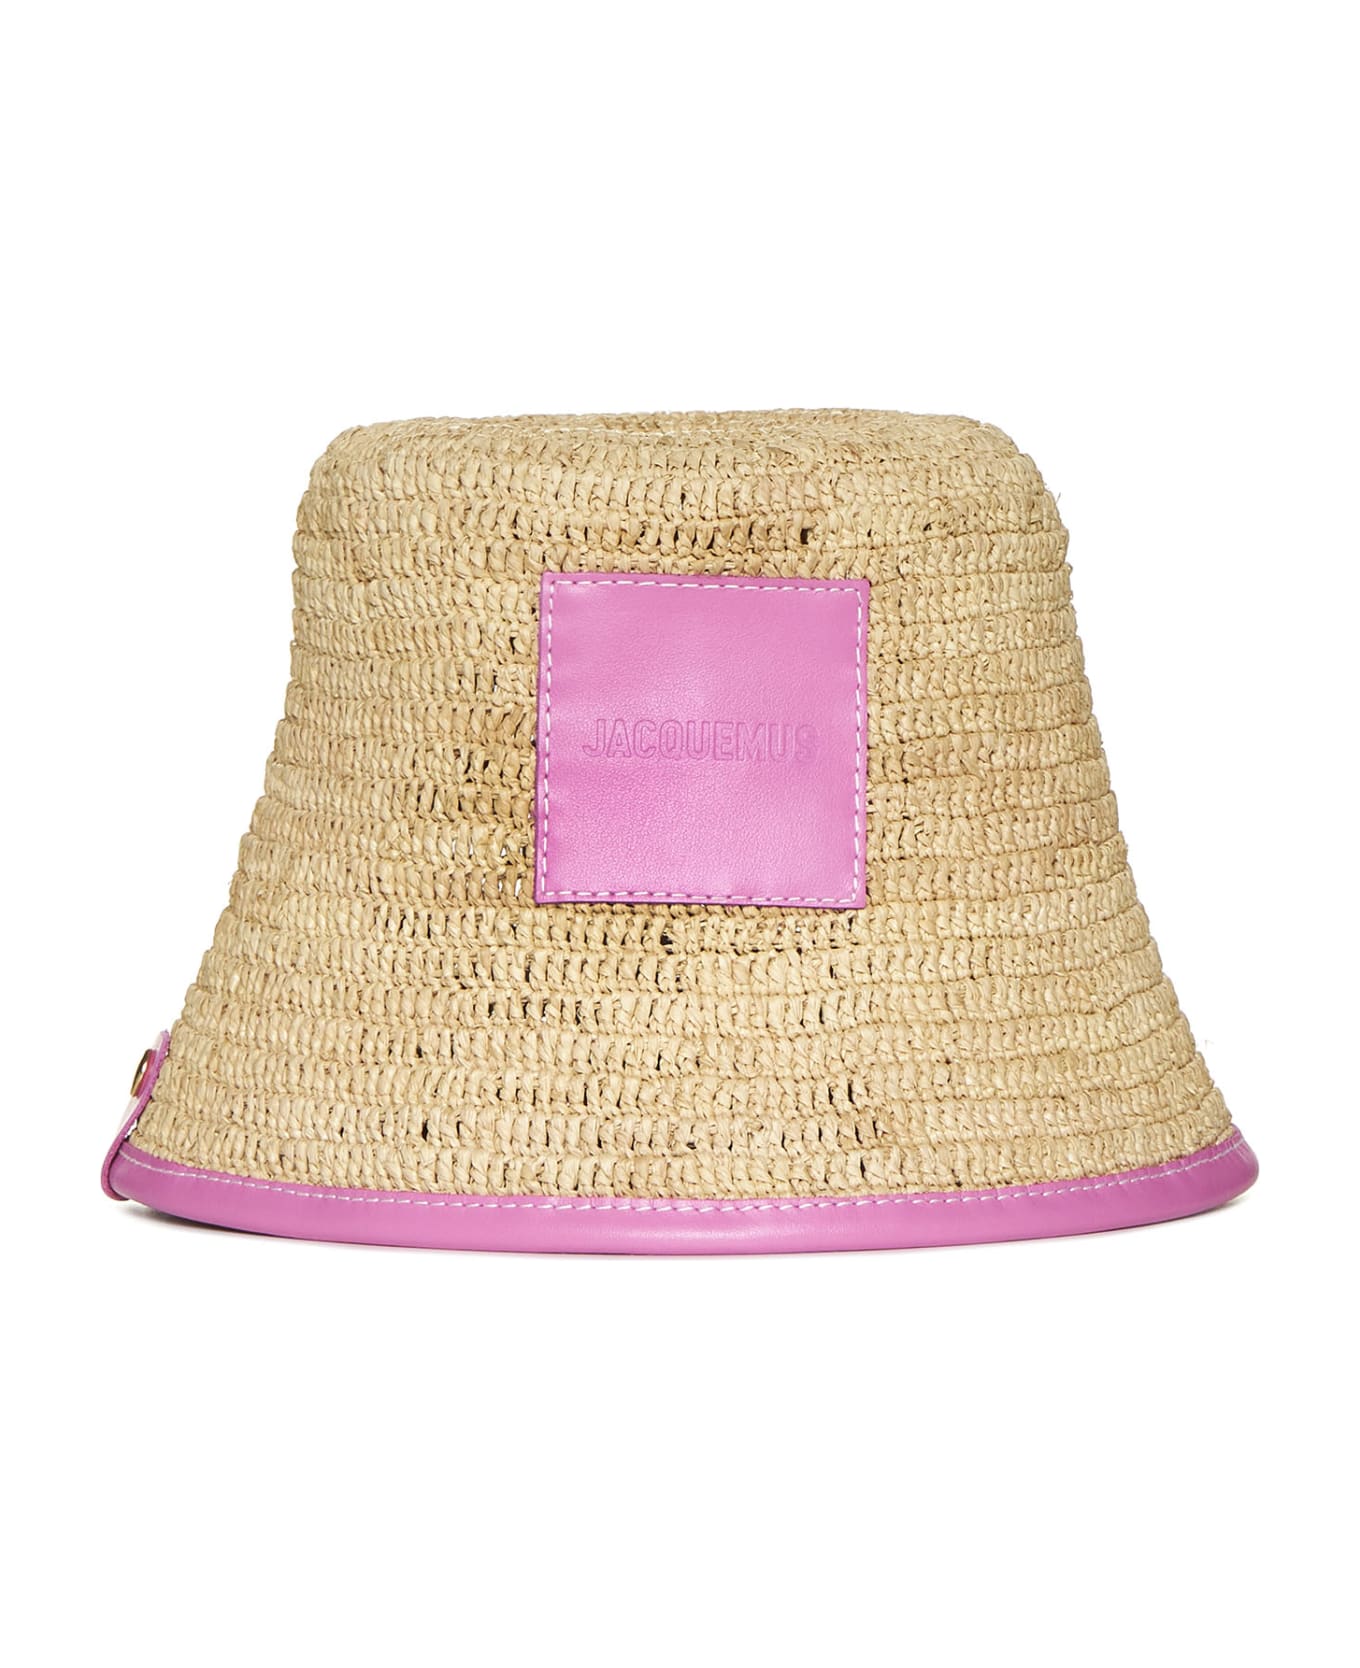 Jacquemus Hat - Neon pink